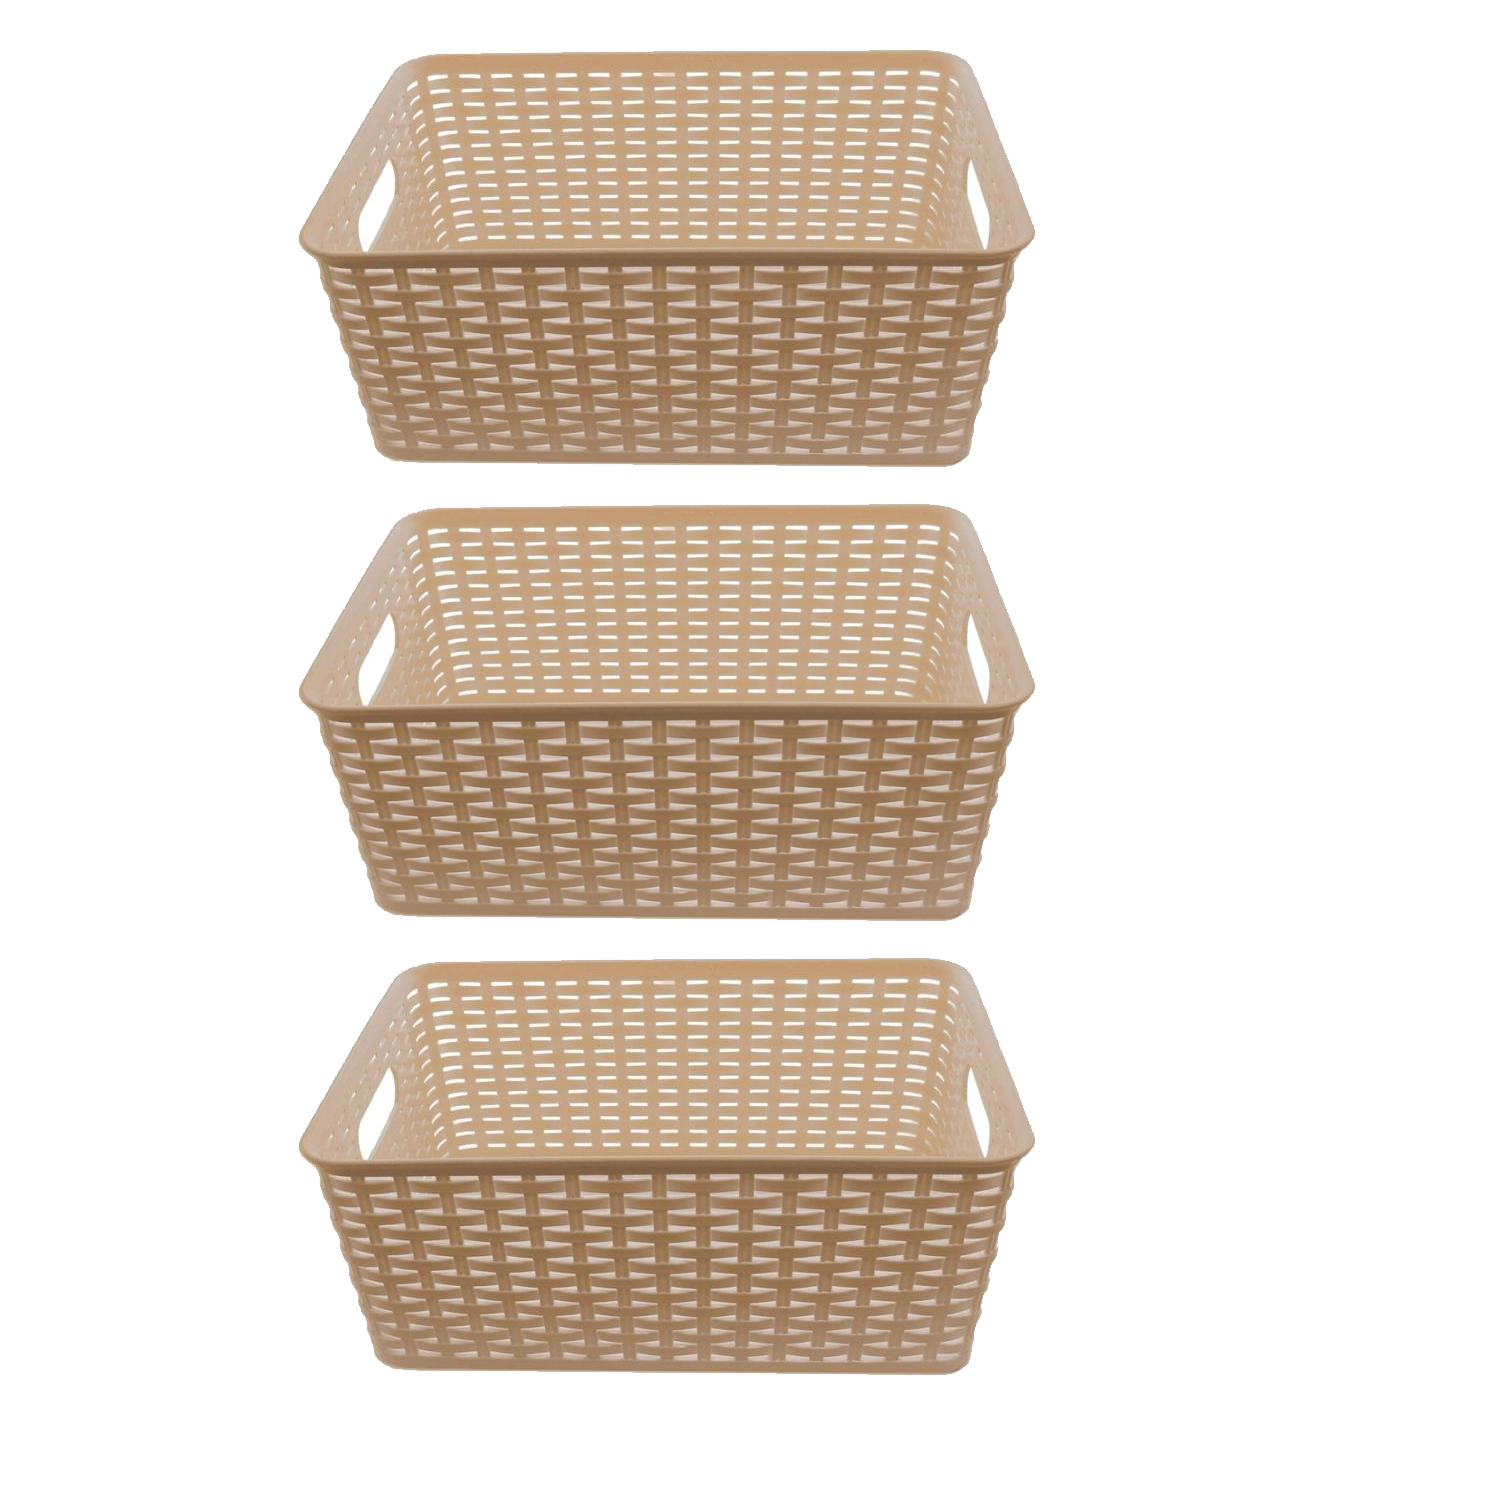 YBM Home Small Plastic Rattan Storage Basket for Bathroom, ba413beige-3 - image 1 of 3